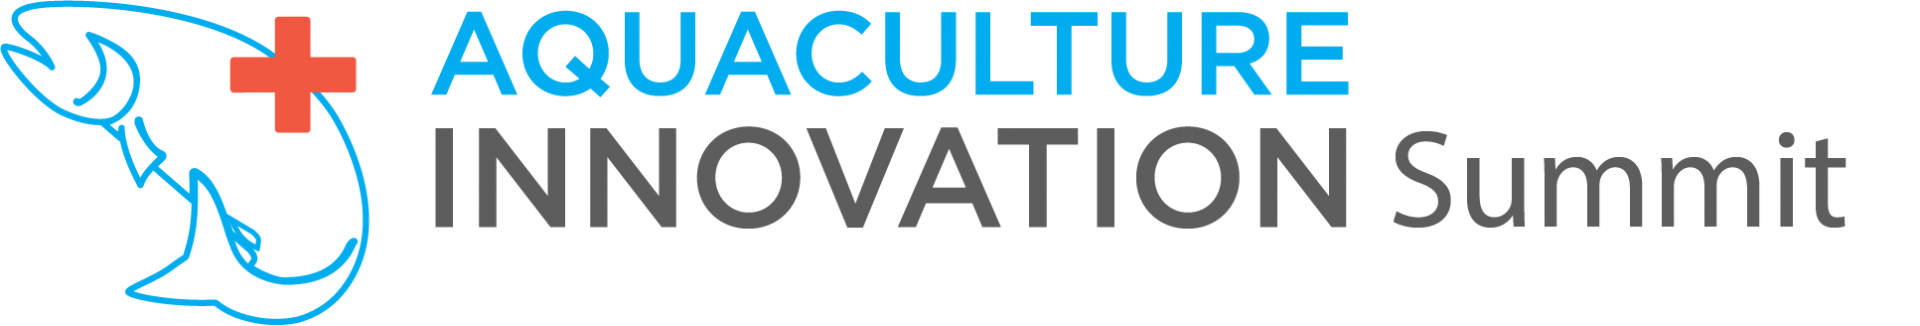 Aquaculture Innovation Summit 2021